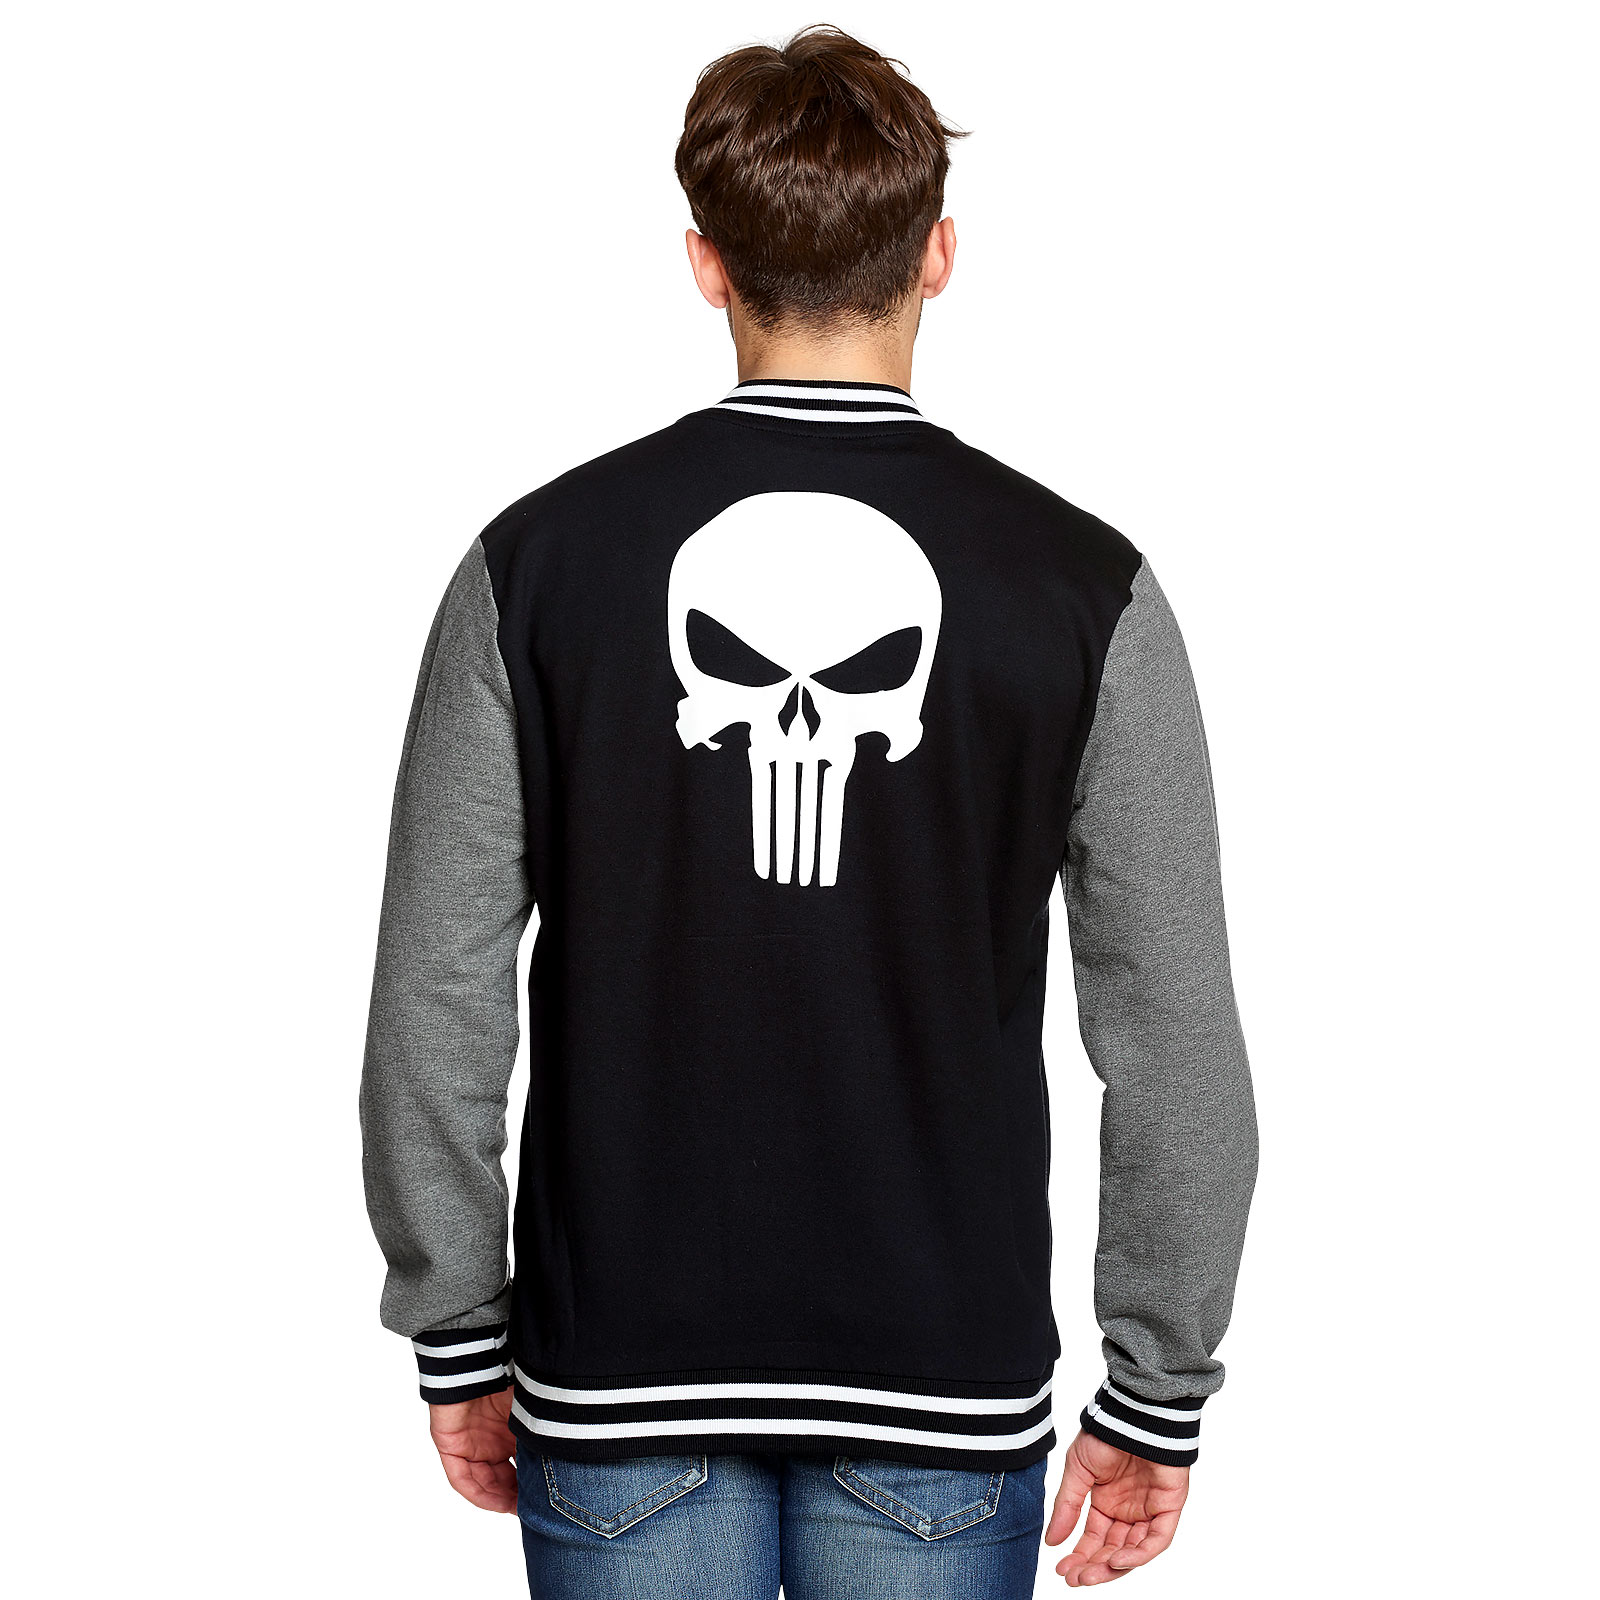 Punisher - Skull College Jacket black-grey